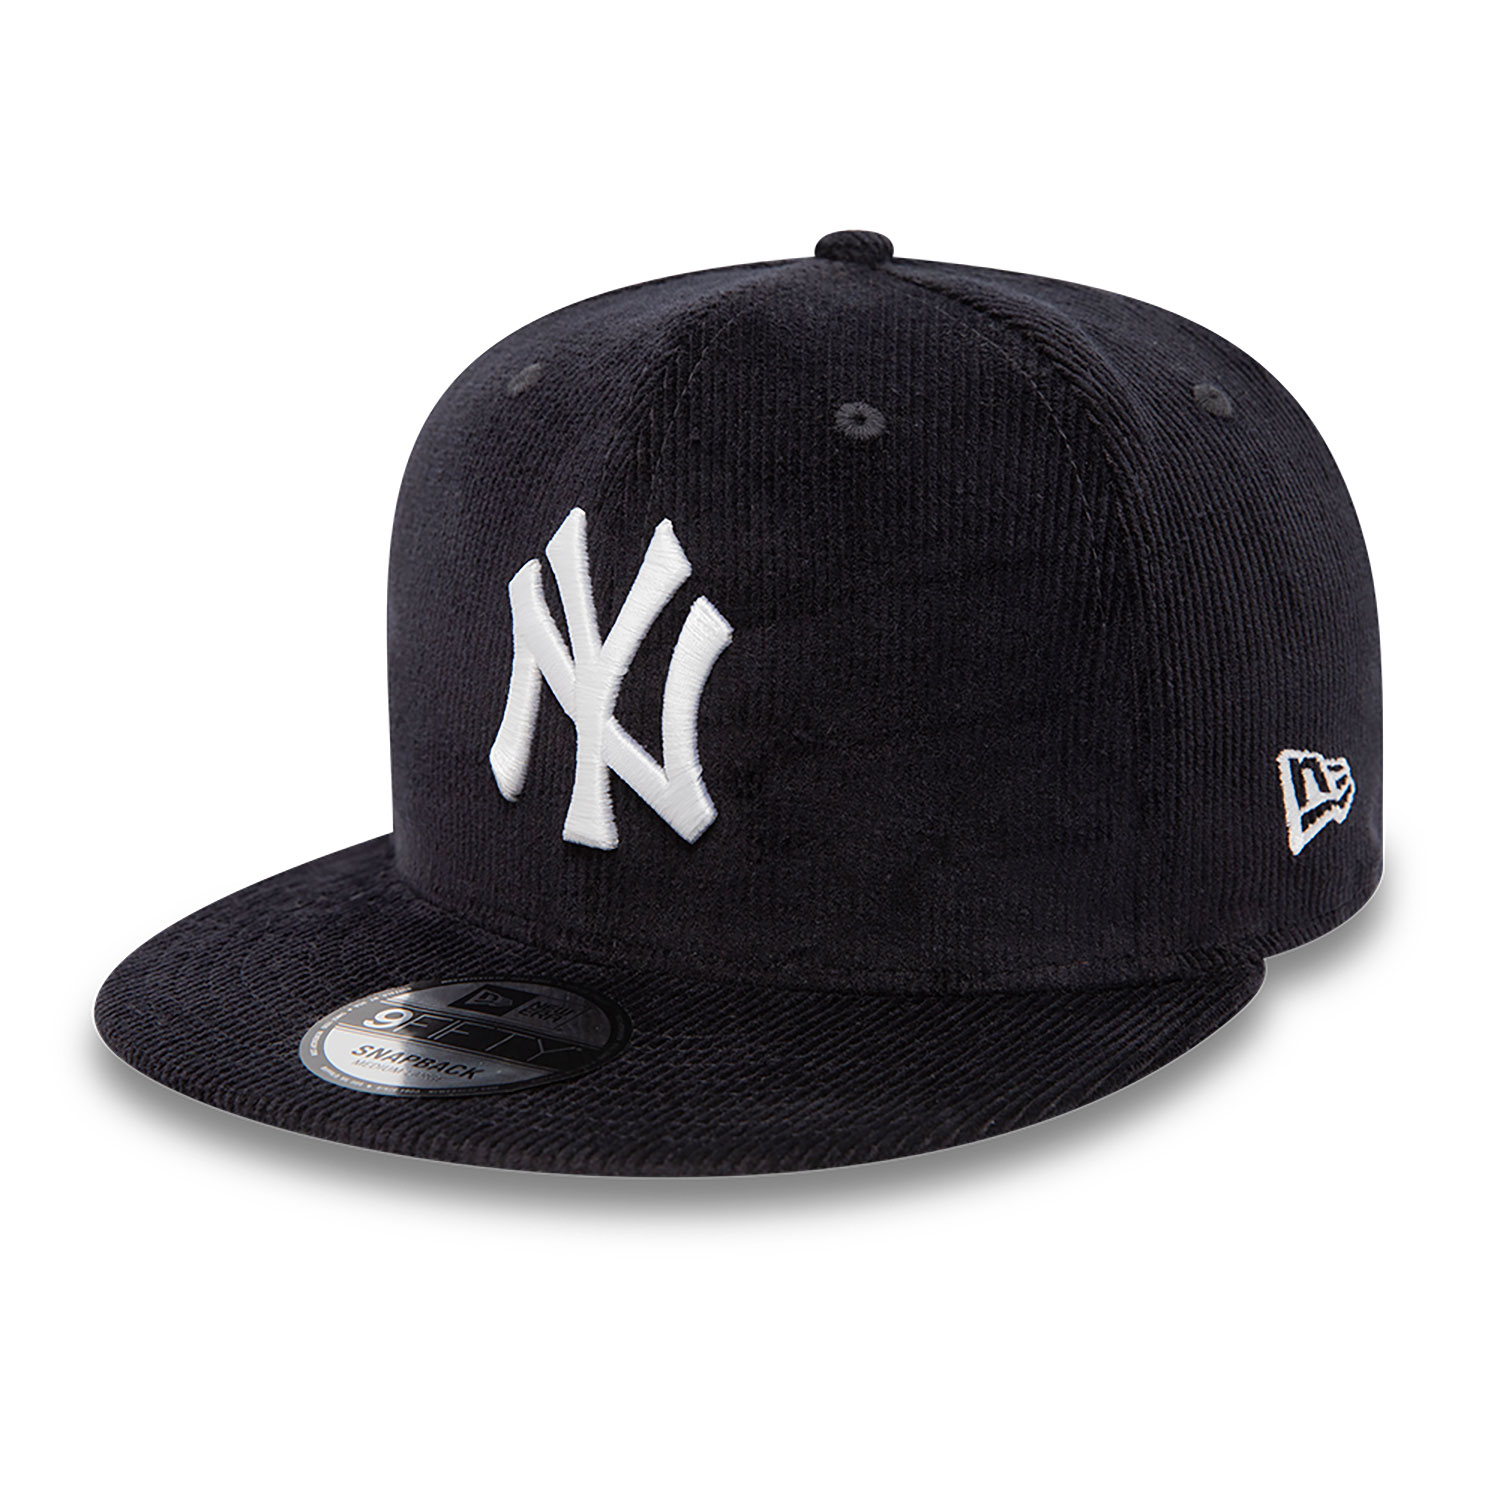 Official New Era New York Yankees Navy 9FIFTY Cap B9642_954 B9642_954 ...